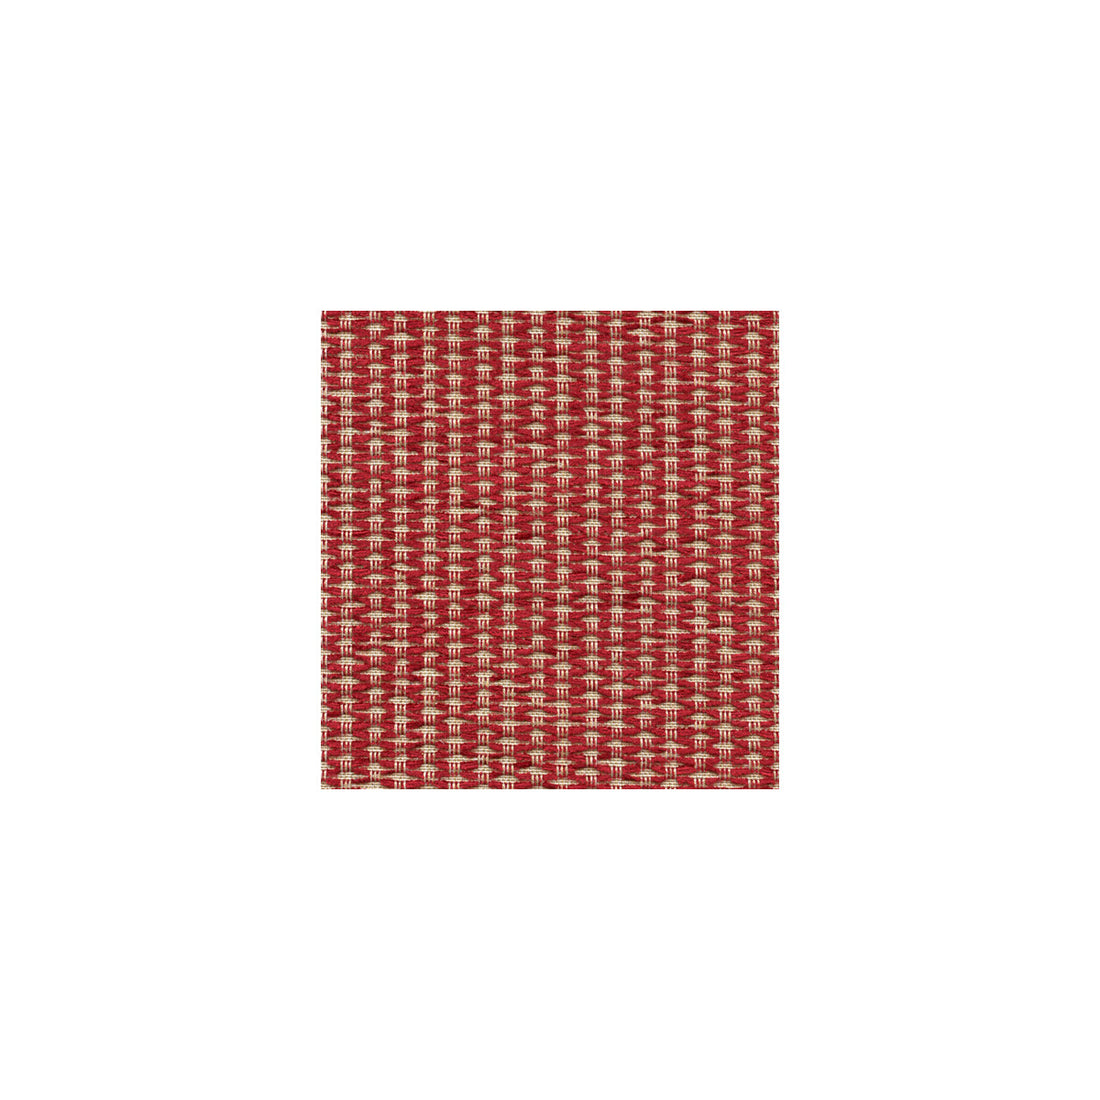 Kravet Design fabric in 31383-19 color - pattern 31383.19.0 - by Kravet Design in the Gis collection